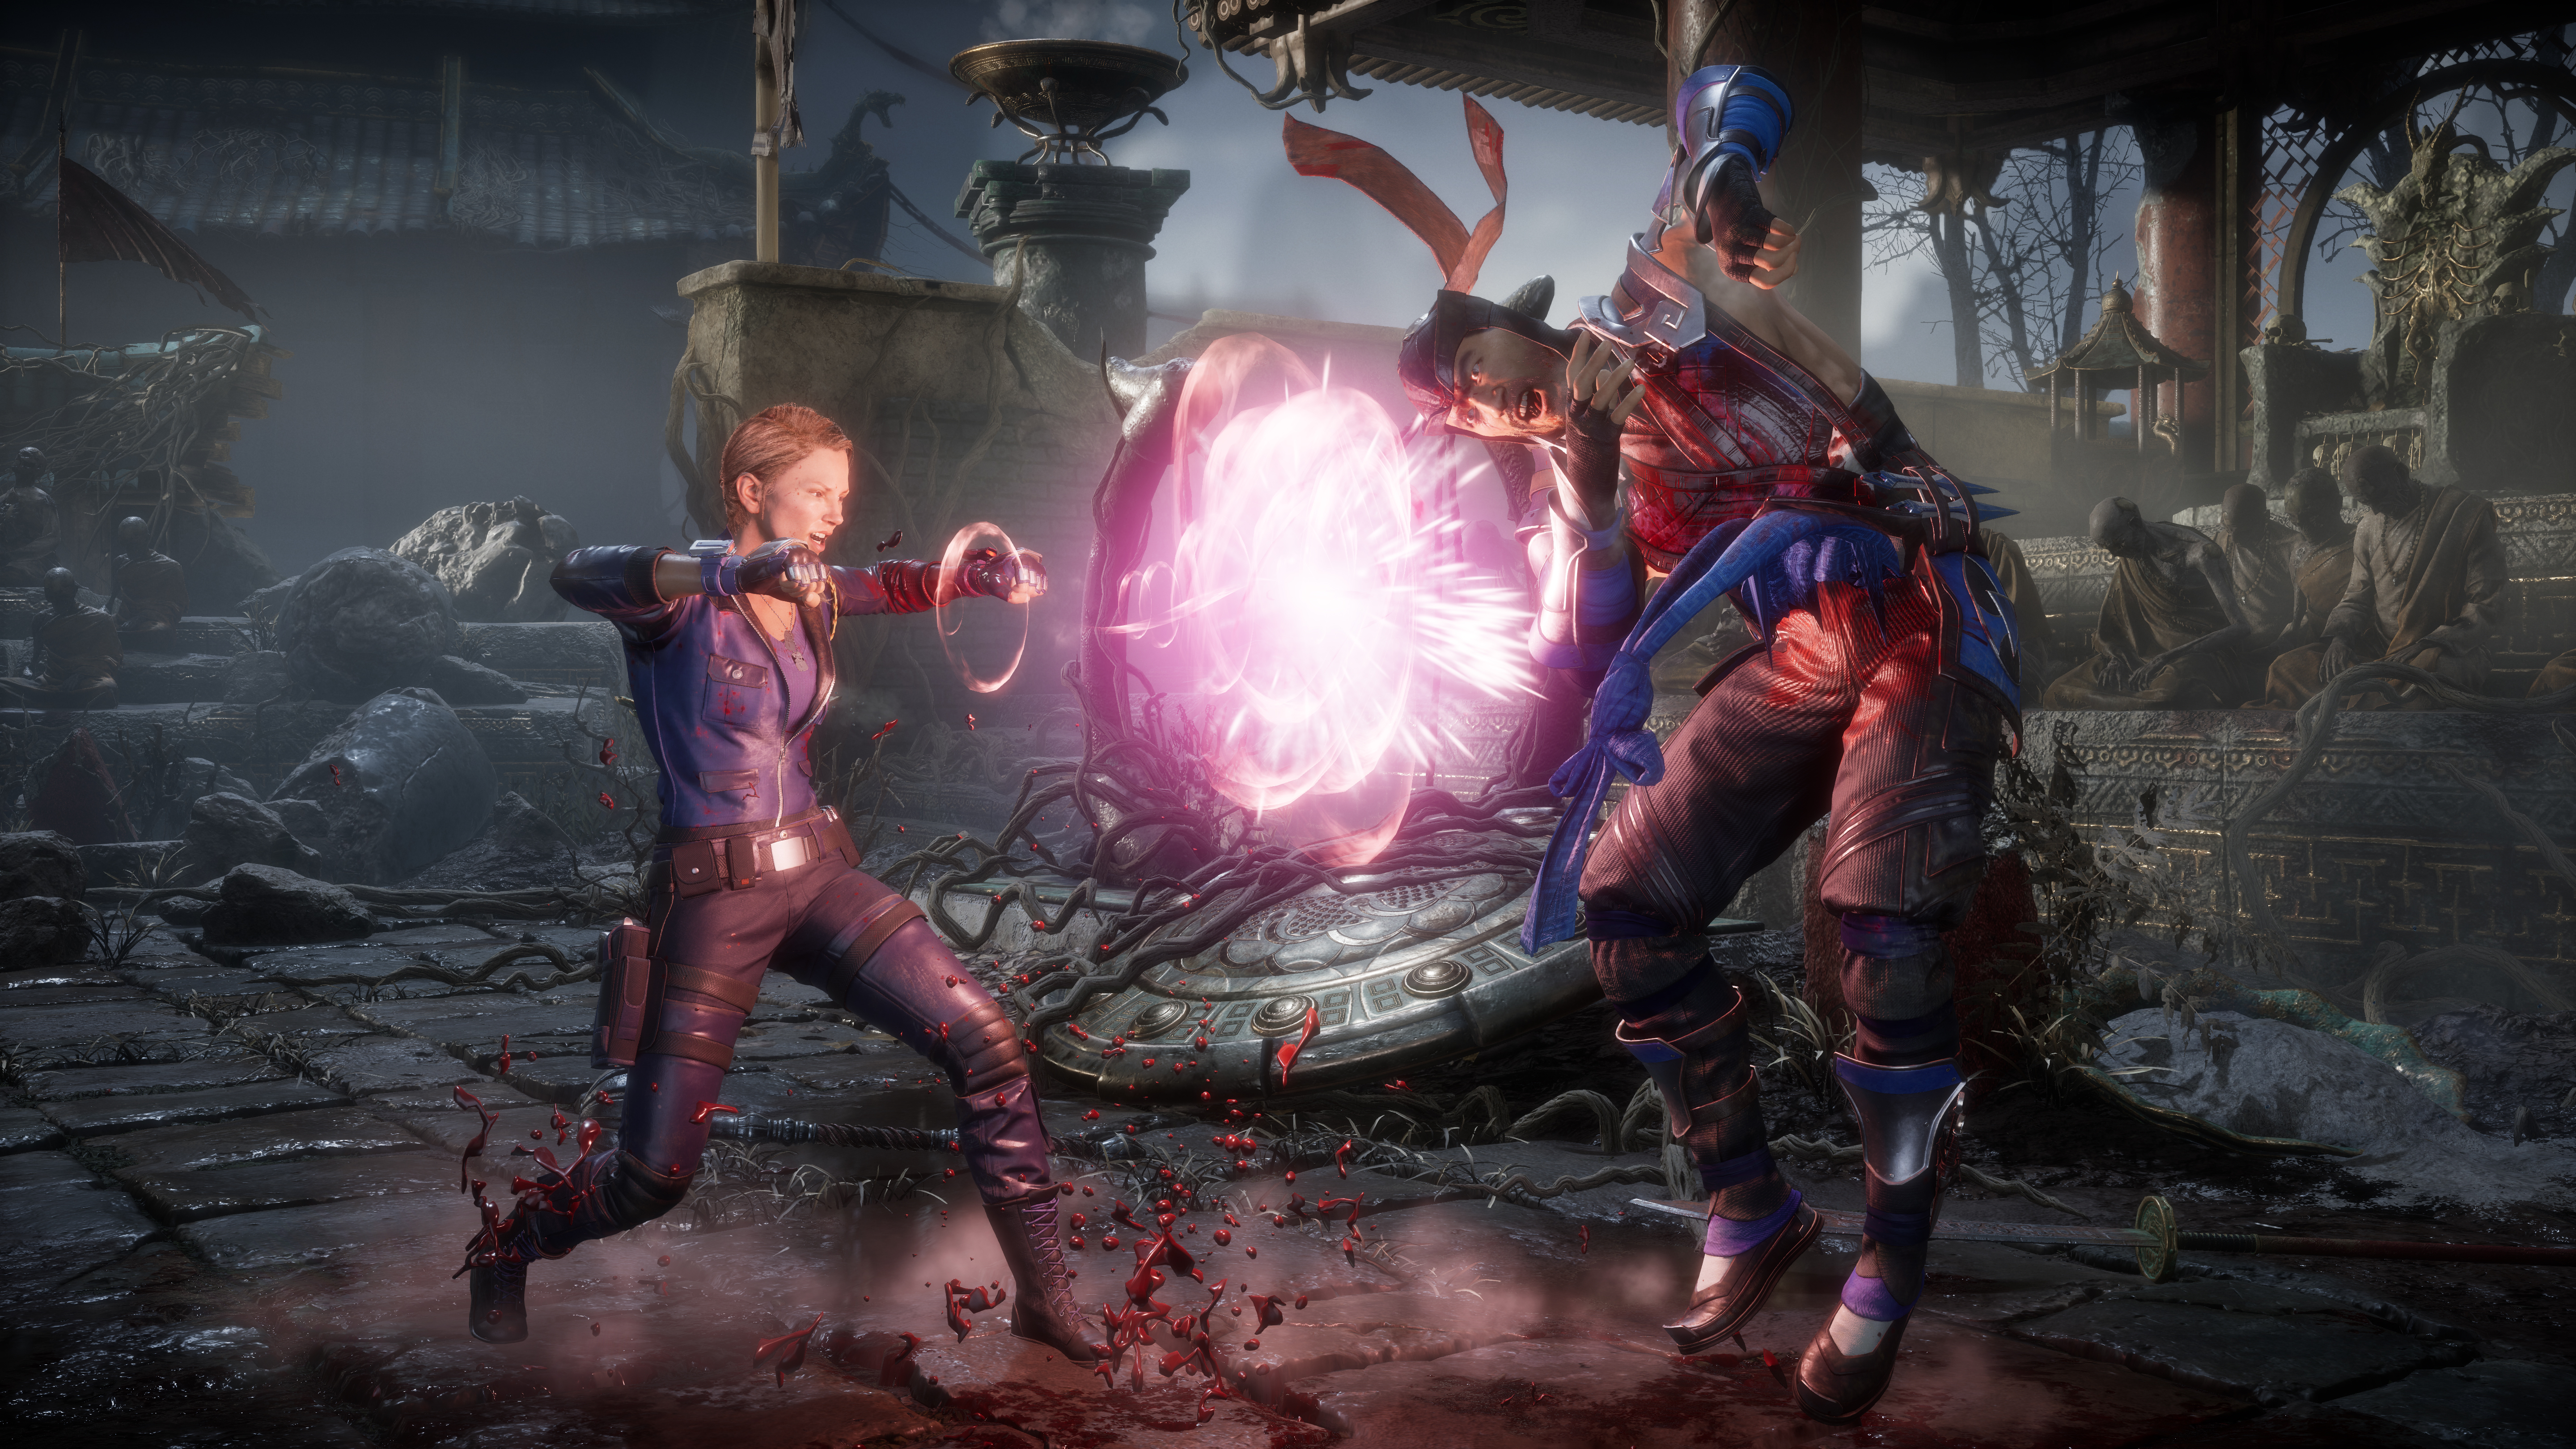 Mortal Kombat 11 vai suportar cross-play entre PS4 e Xbox One